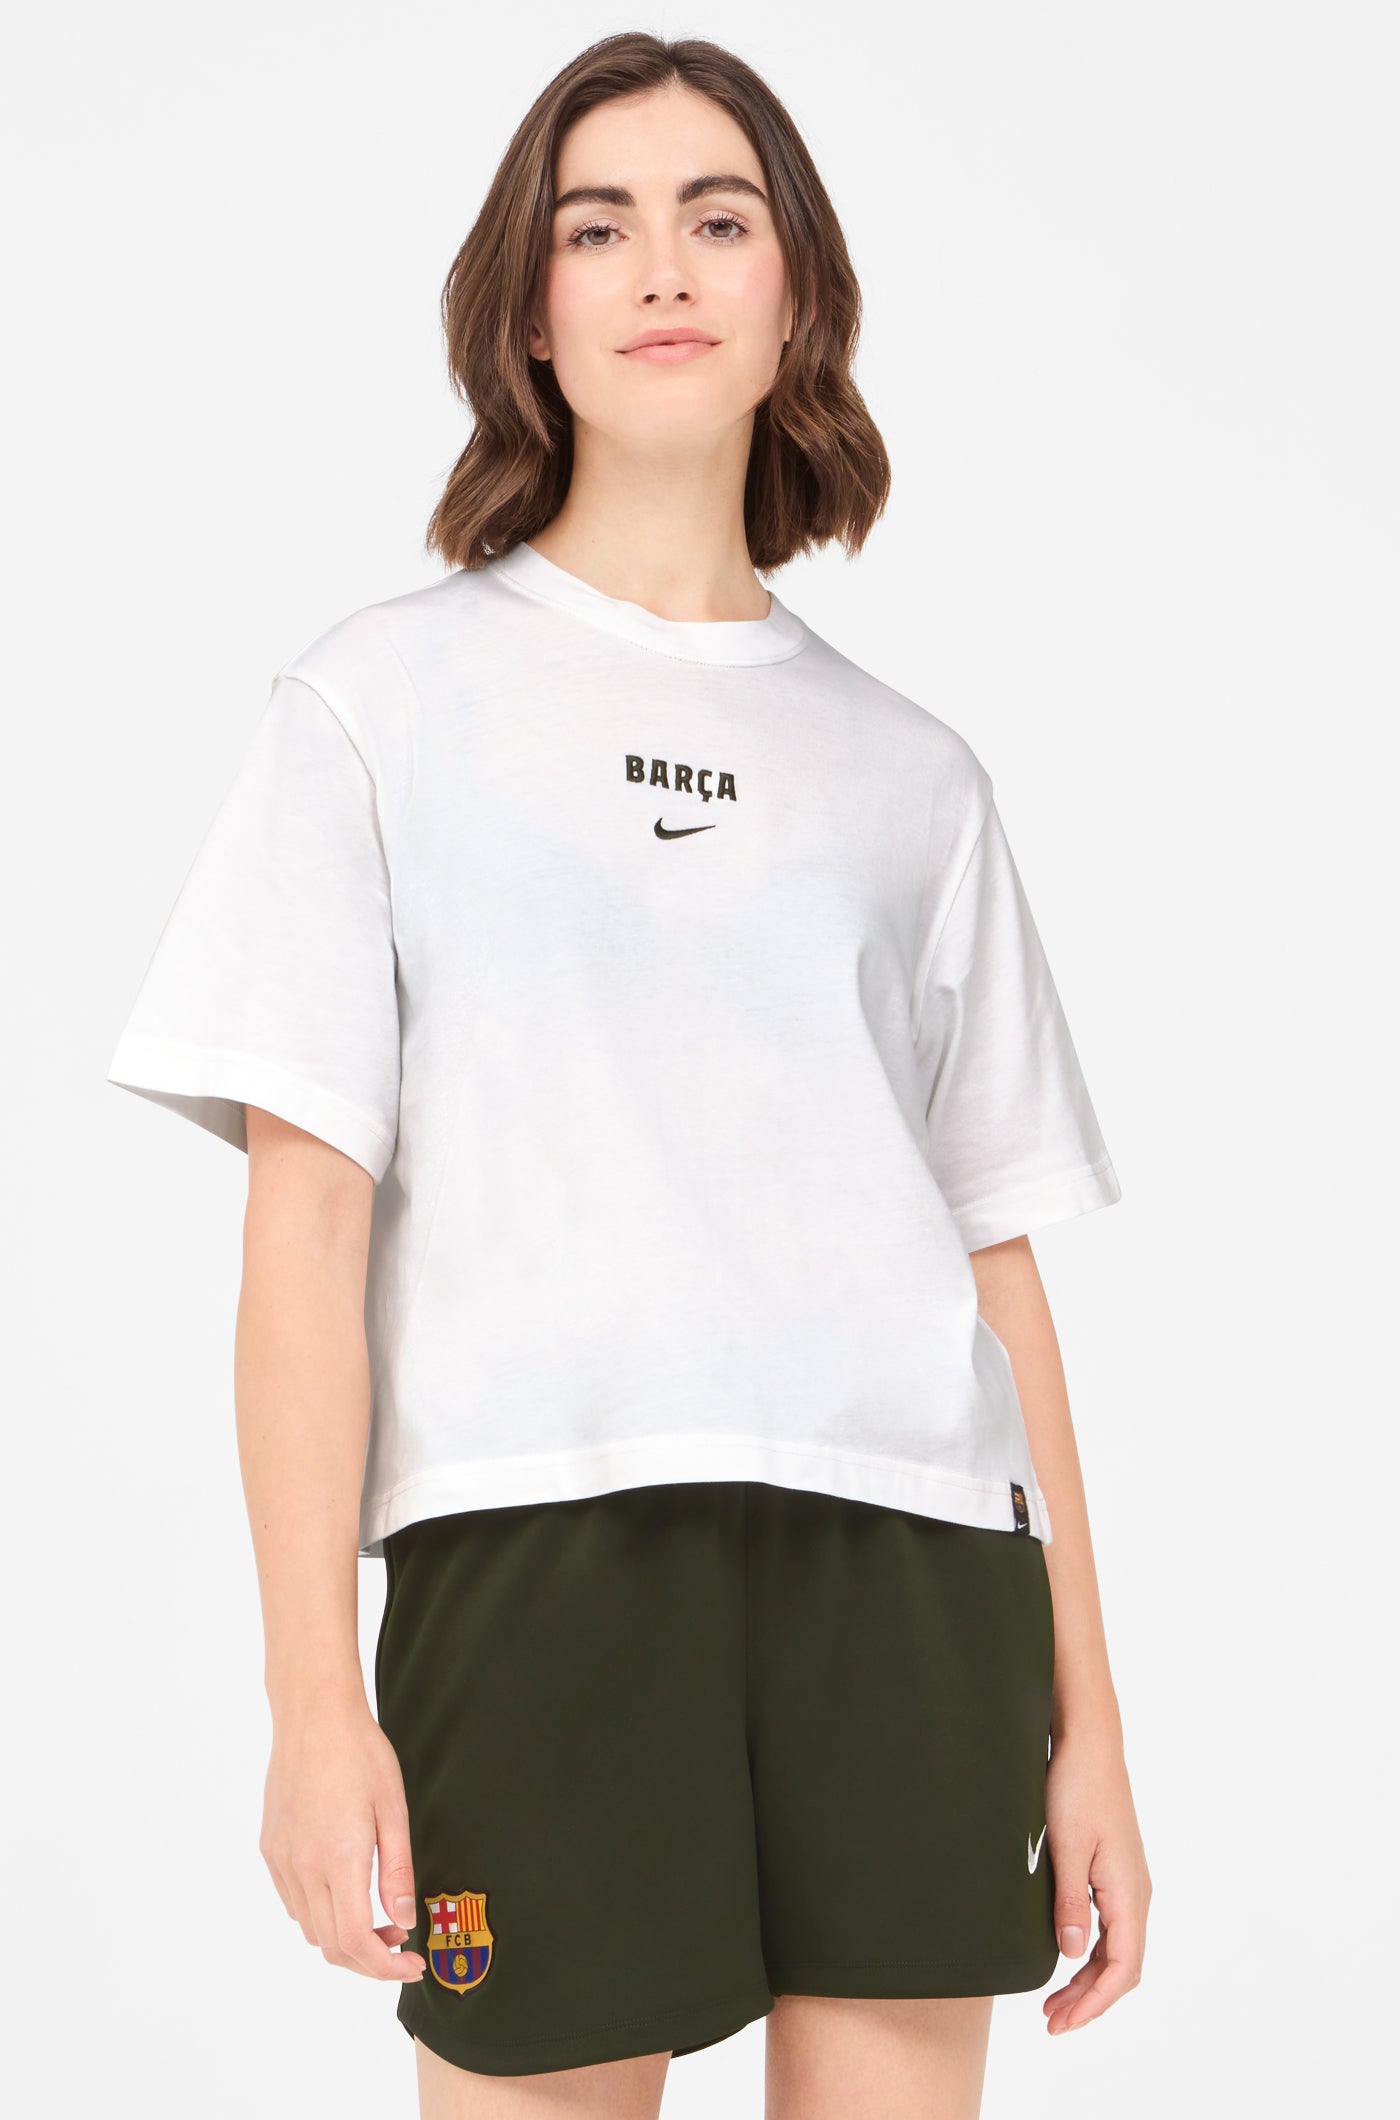 T-shirt short sleeve white Barça Nike - Women – Barça Official Store  Spotify Camp Nou